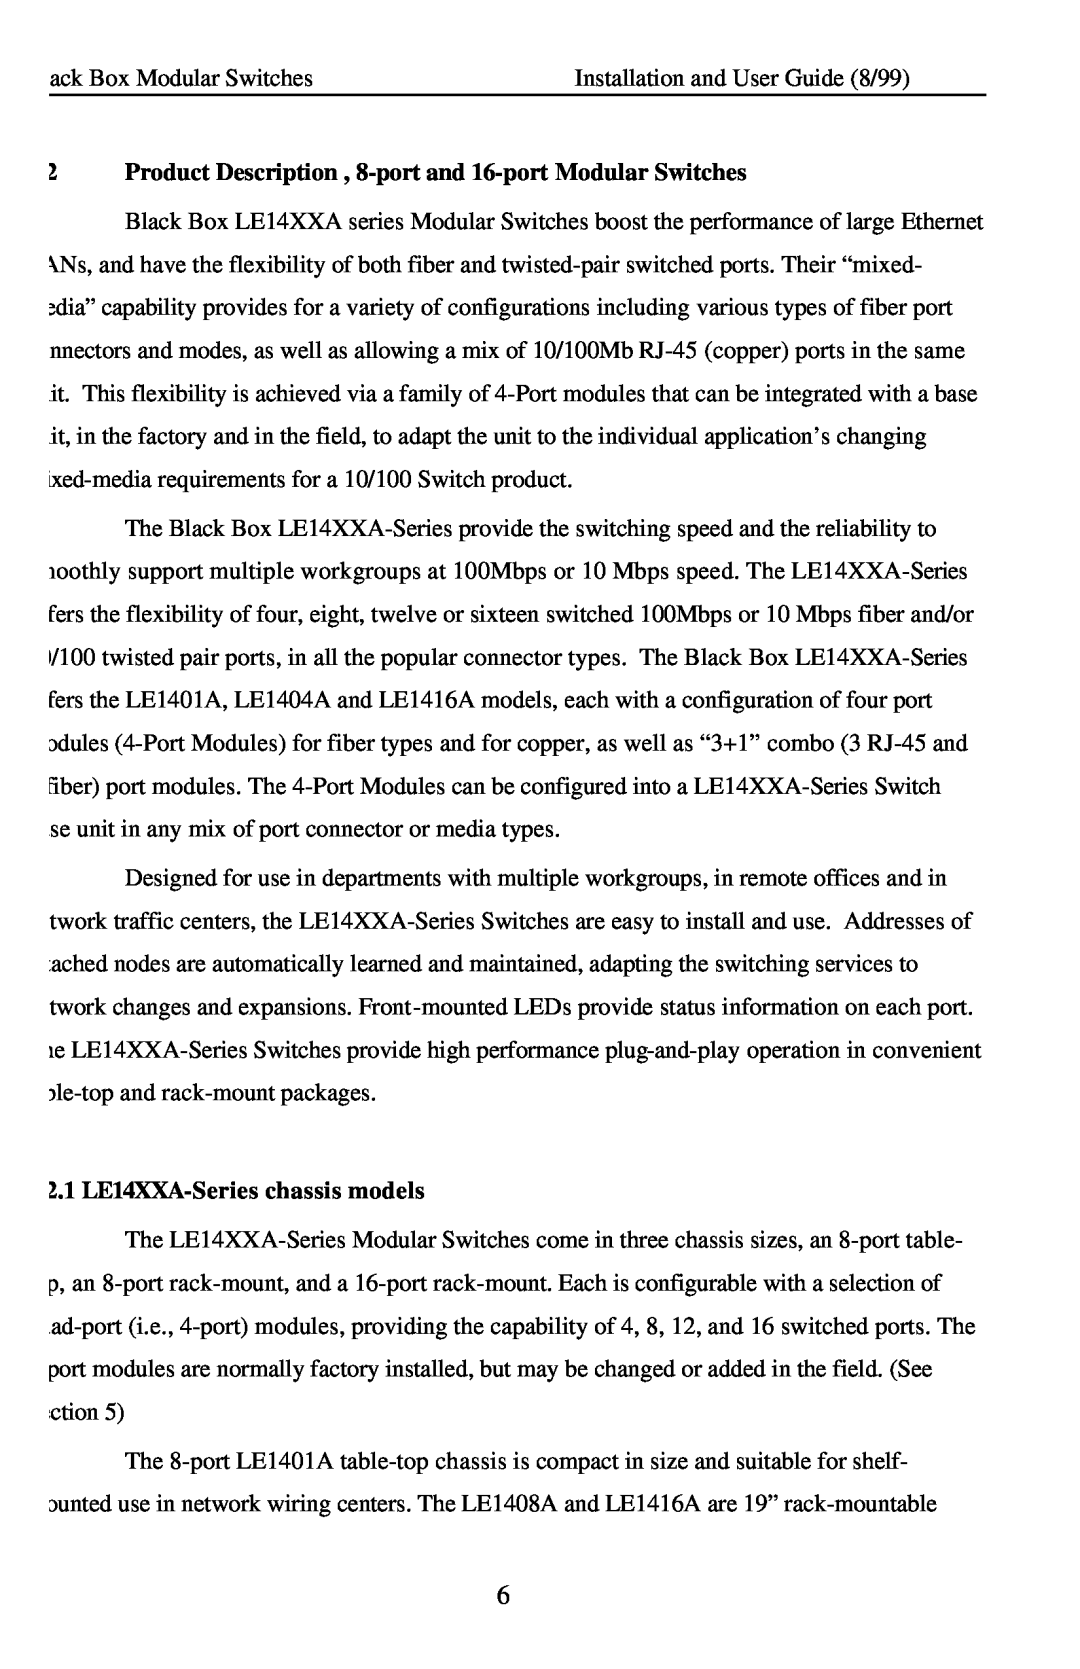 Black Box Modular Switches manual 2.1 LE14XXA-Serieschassis models 